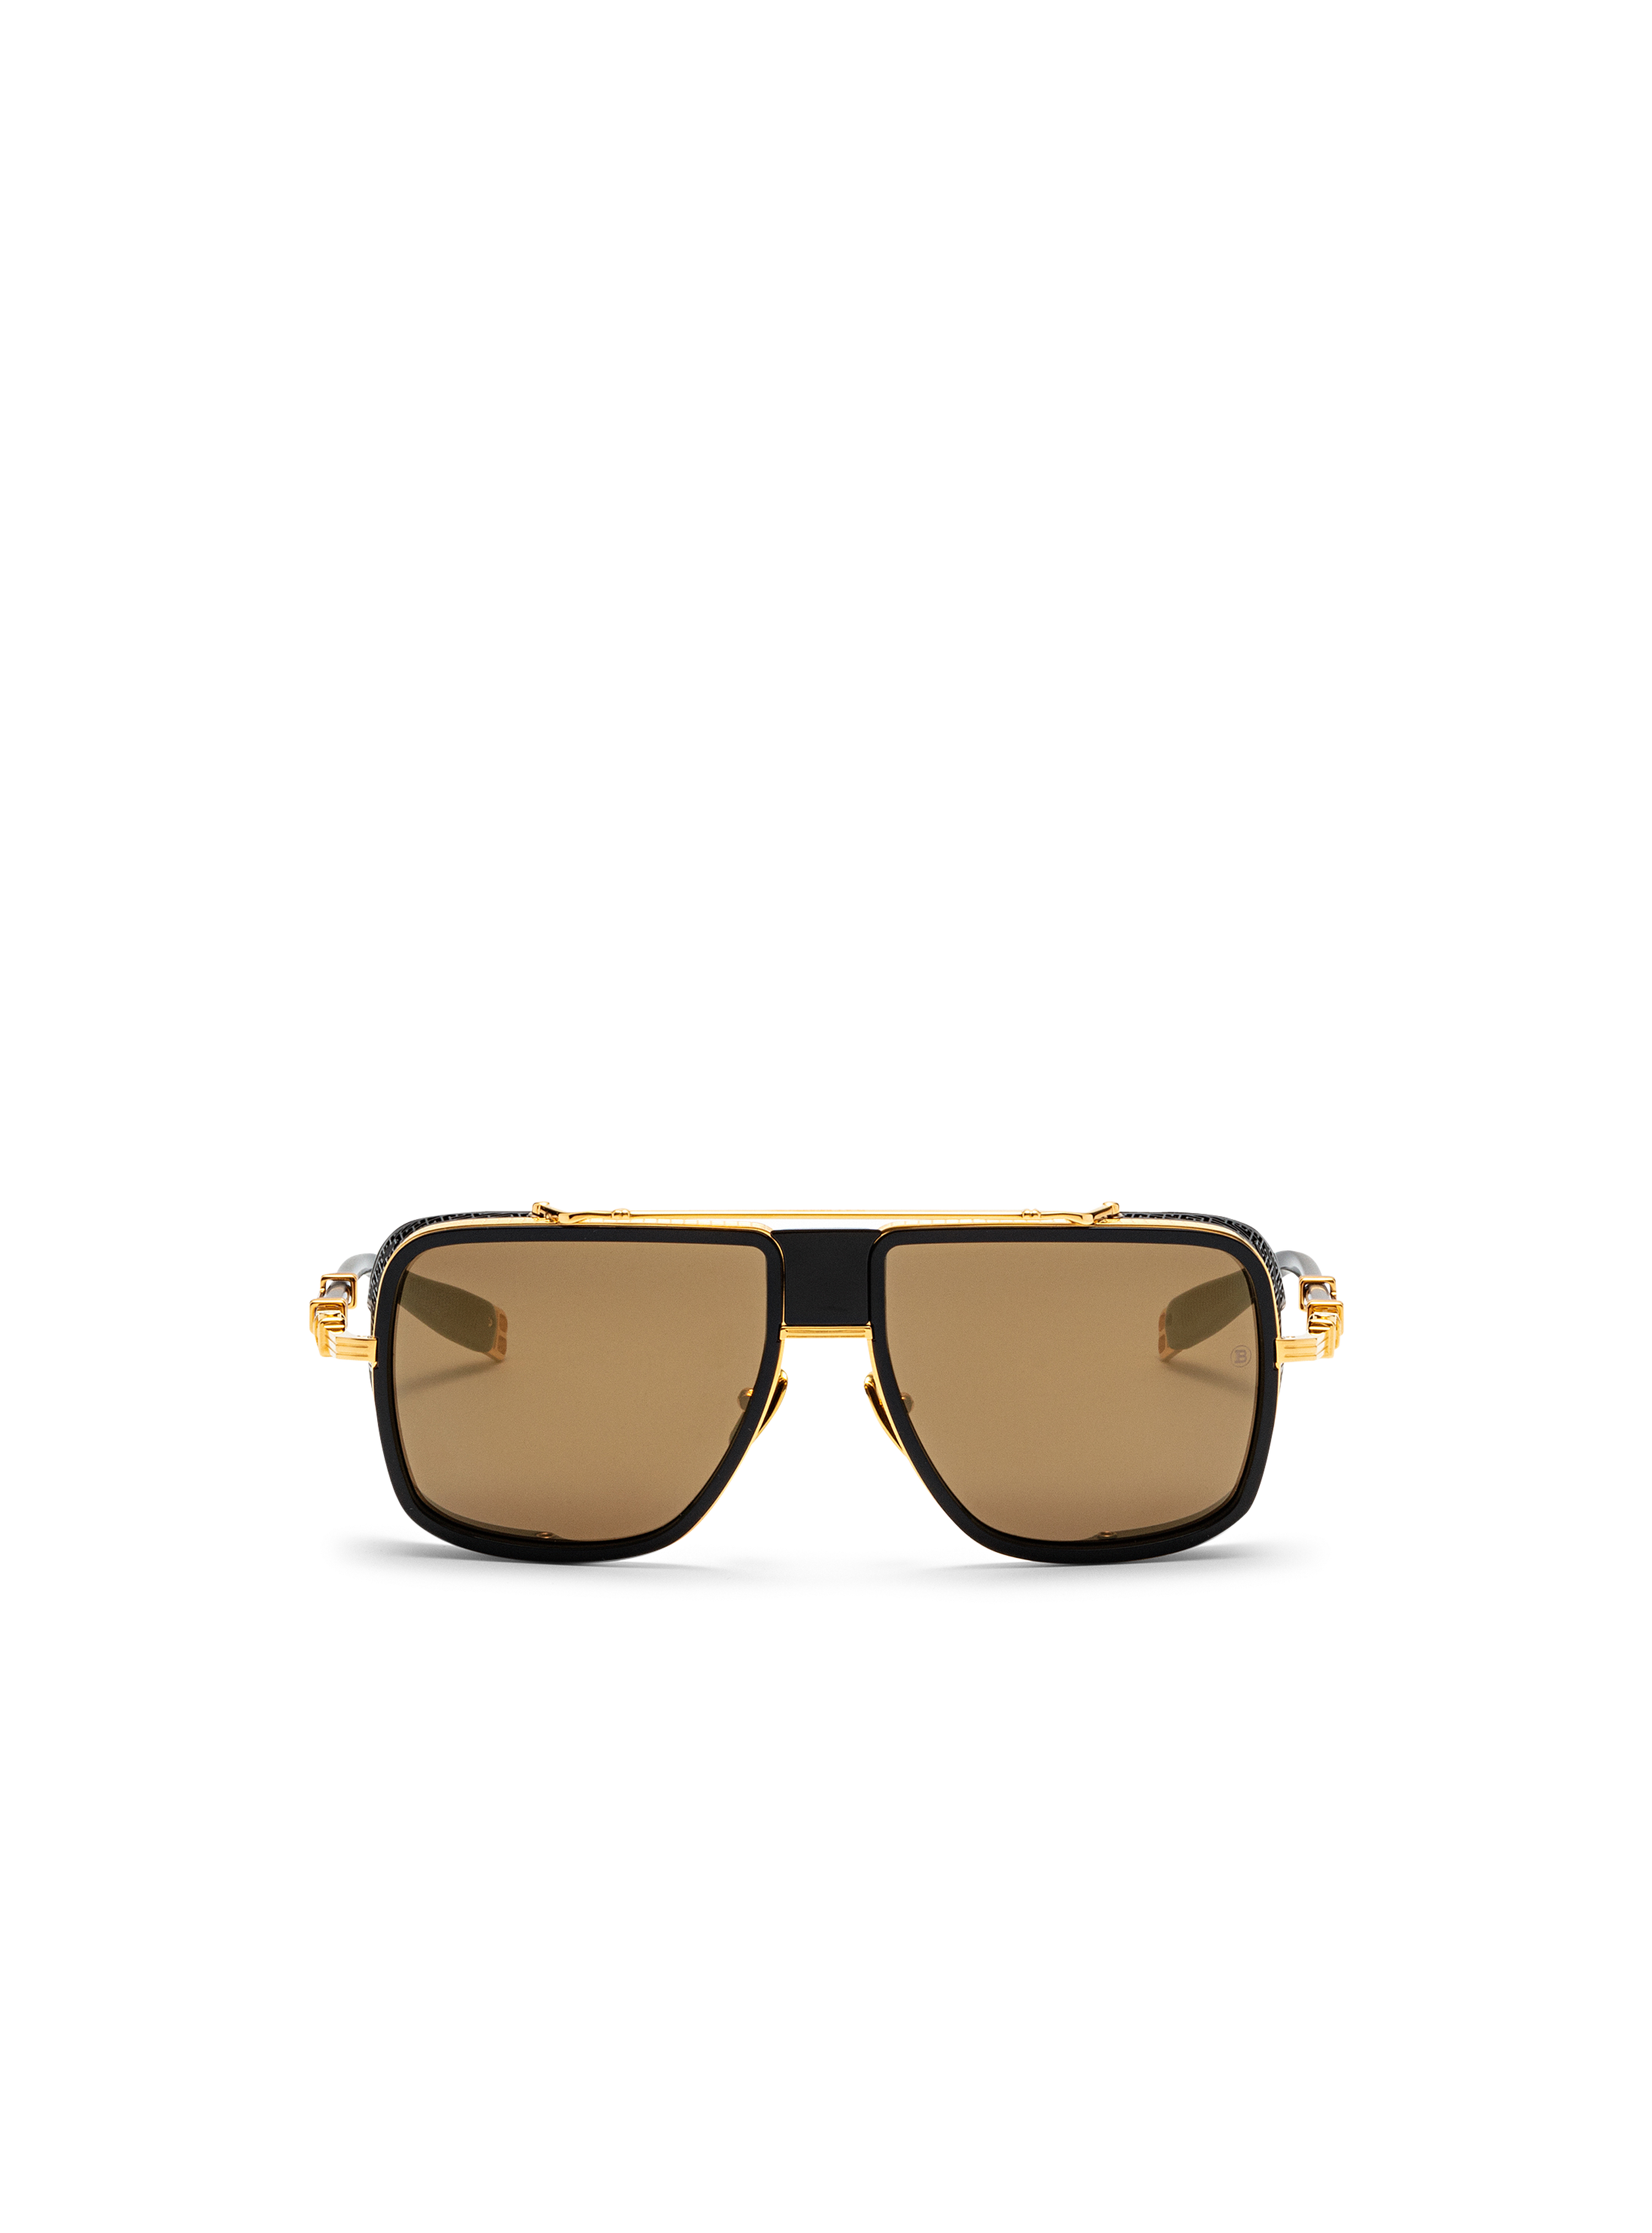 O.R. Sunglasses, brown